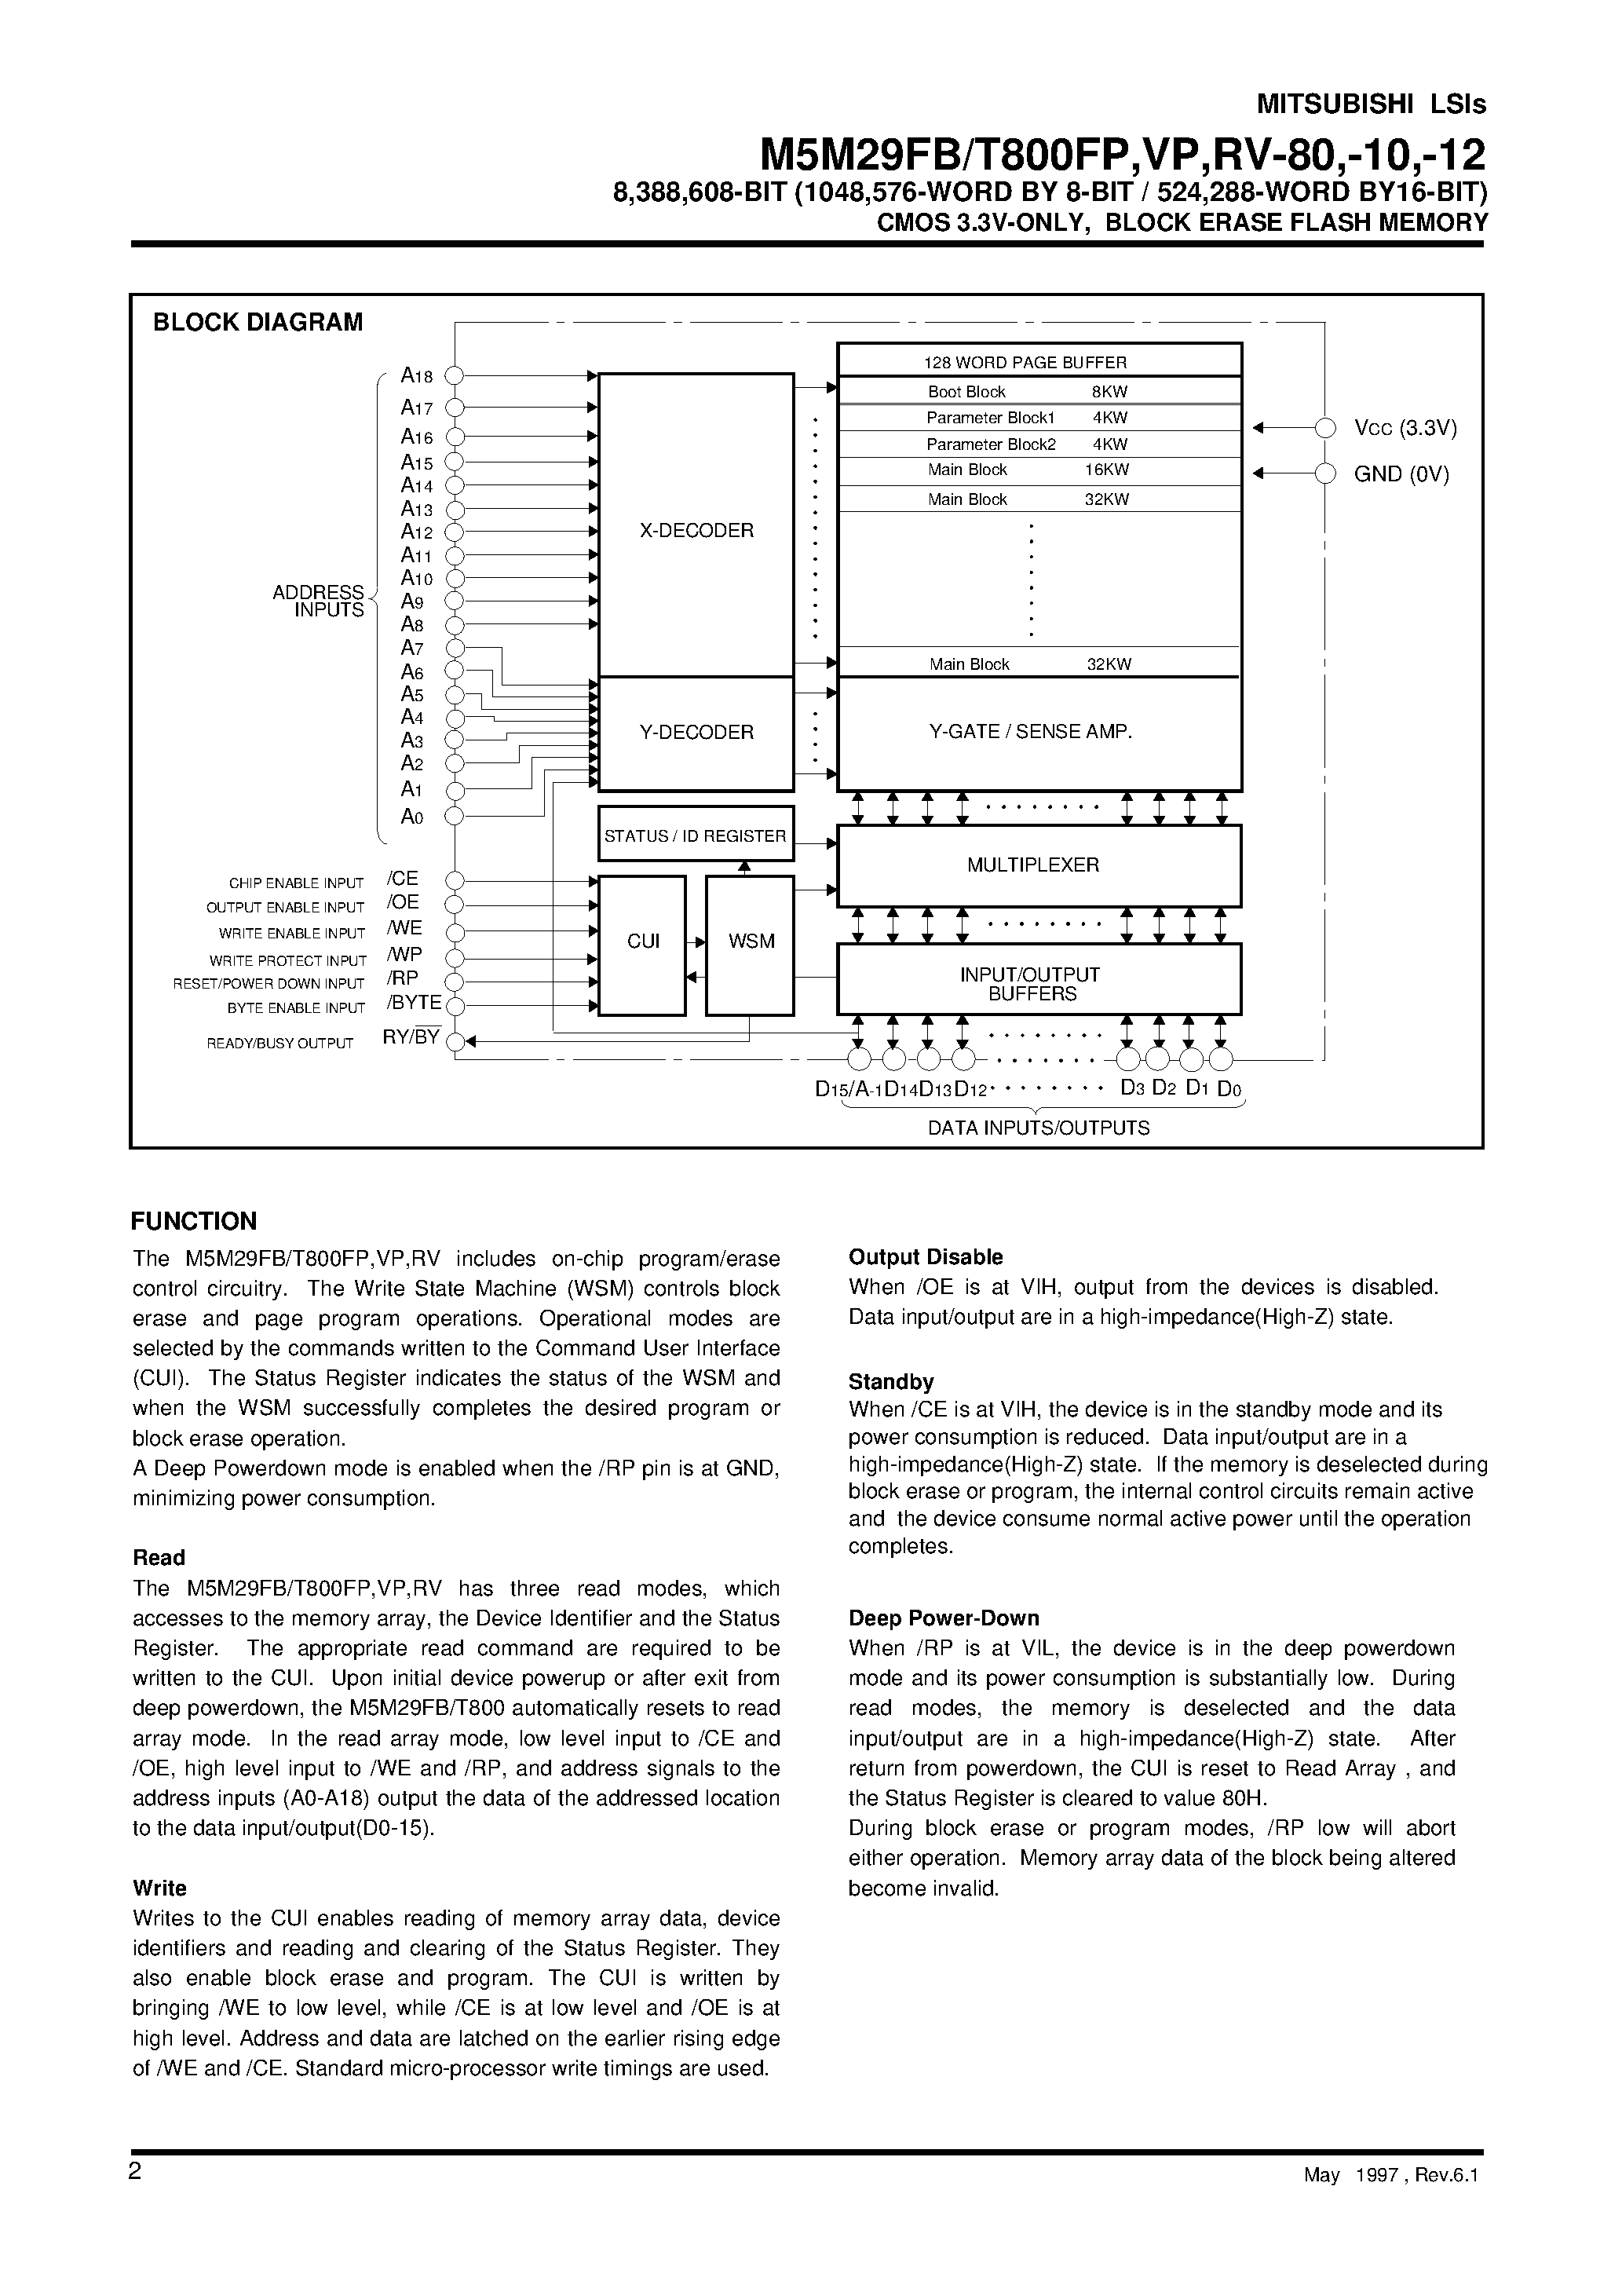 Datasheet M5M29FB800VP - 8 /388 /608-BIT (1048 /576-576-WORD BY 8-BIT / 524 /288-WORD BY16-BIT)CMOS 3.3V-ONLY / BLOCK ERASE FLASH MEMORY page 2